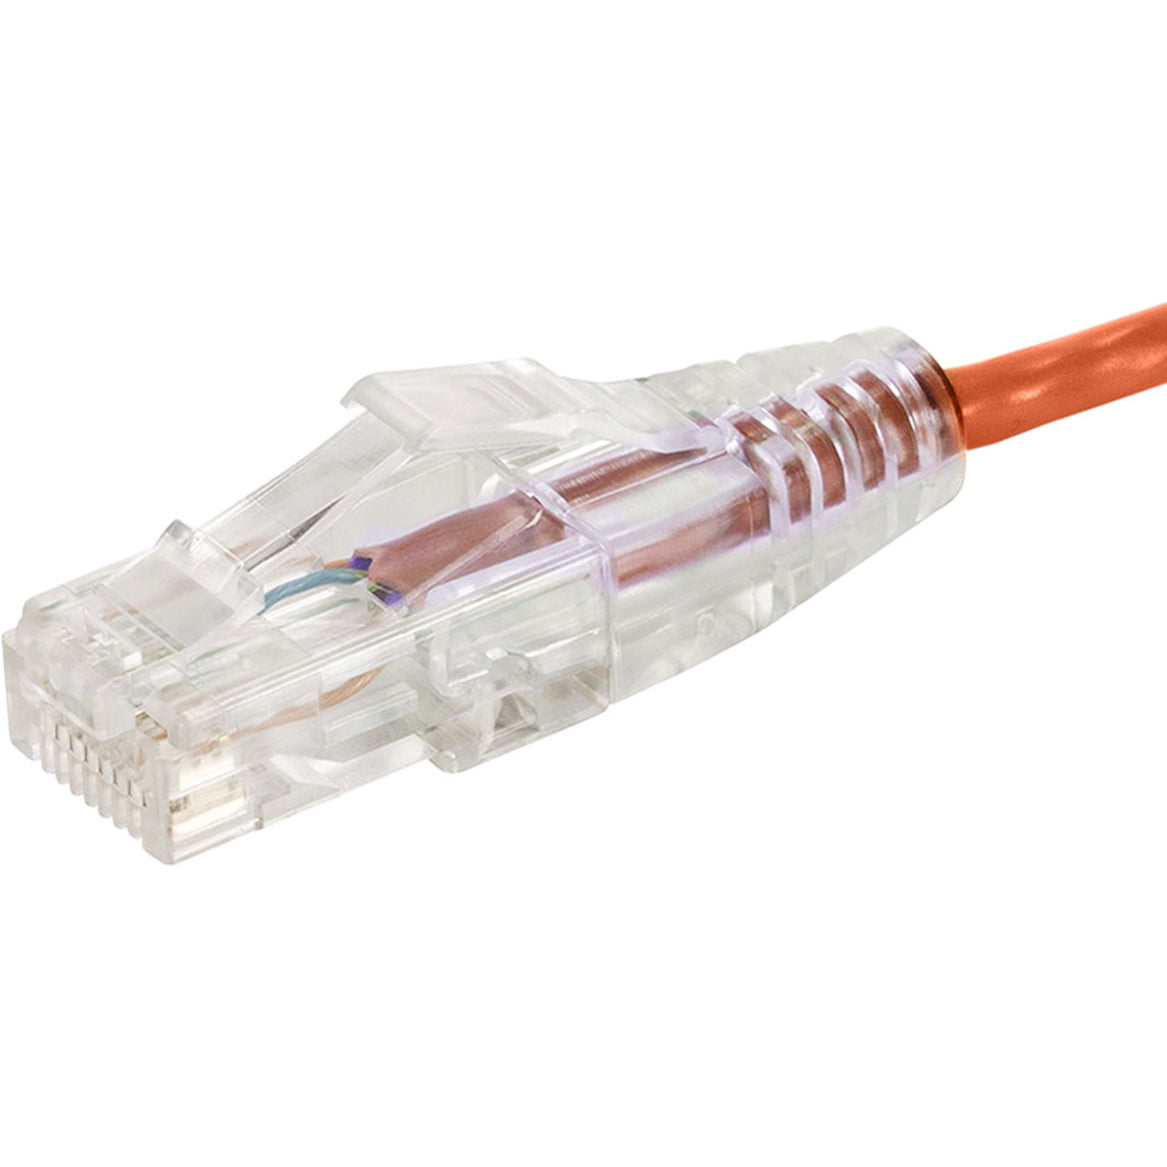 Monoprice 14807 SlimRun Cat6 28AWG UTP Ethernet Network Cable, 3ft Orange, Flexible, Snagless